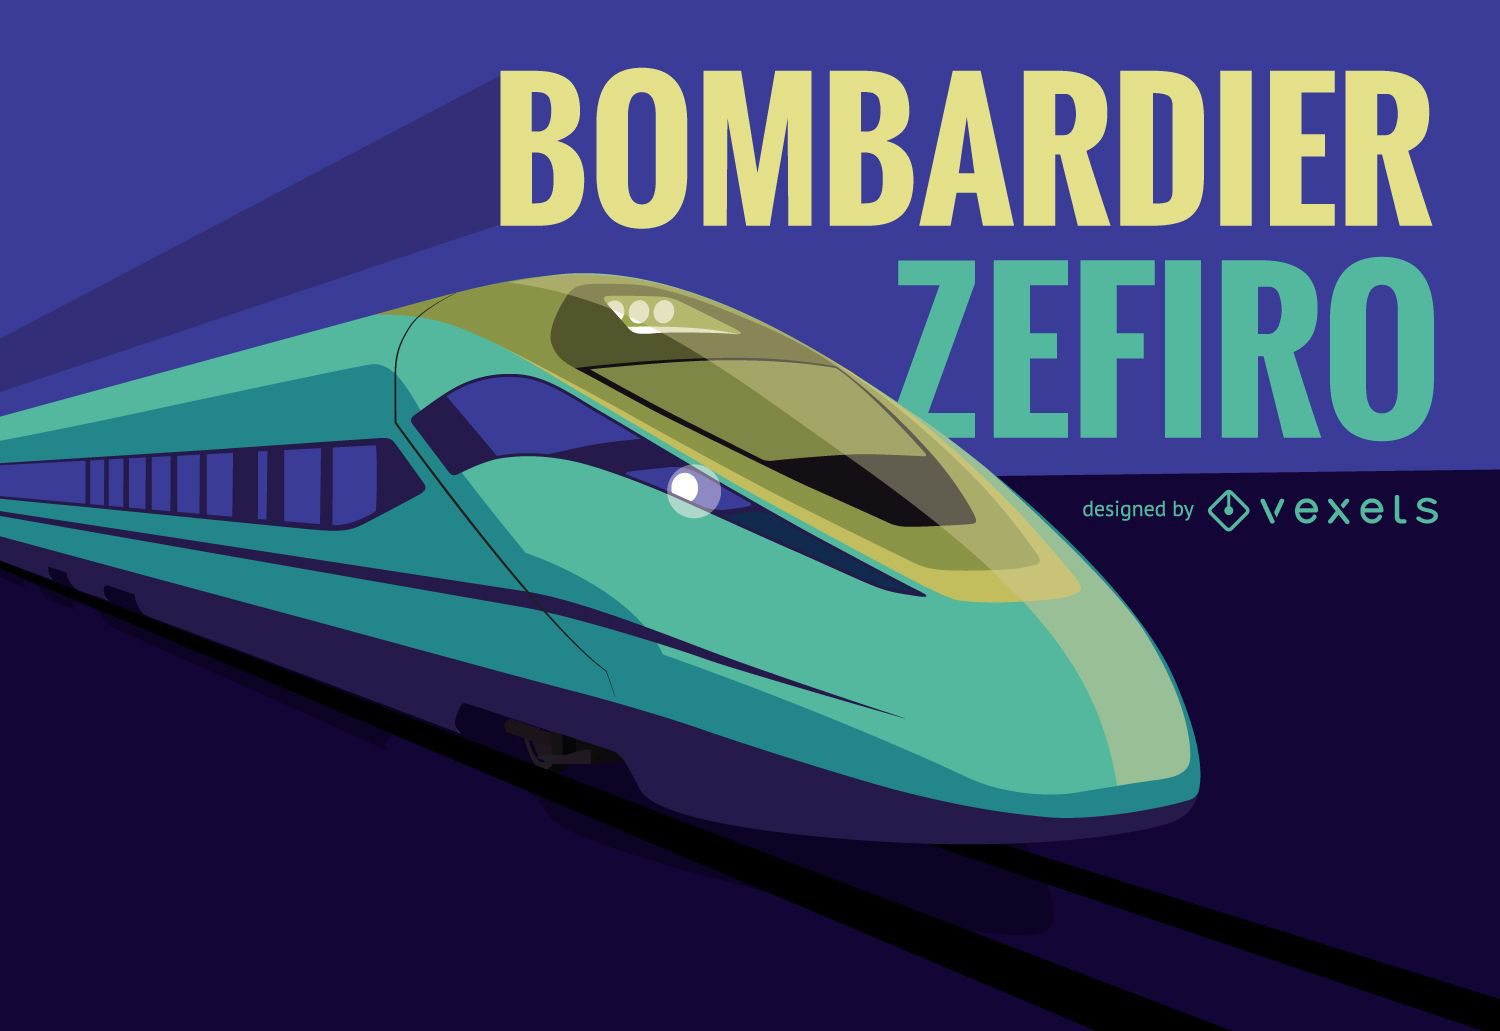 Ilustraci?n del tren Bombardier Zefiro